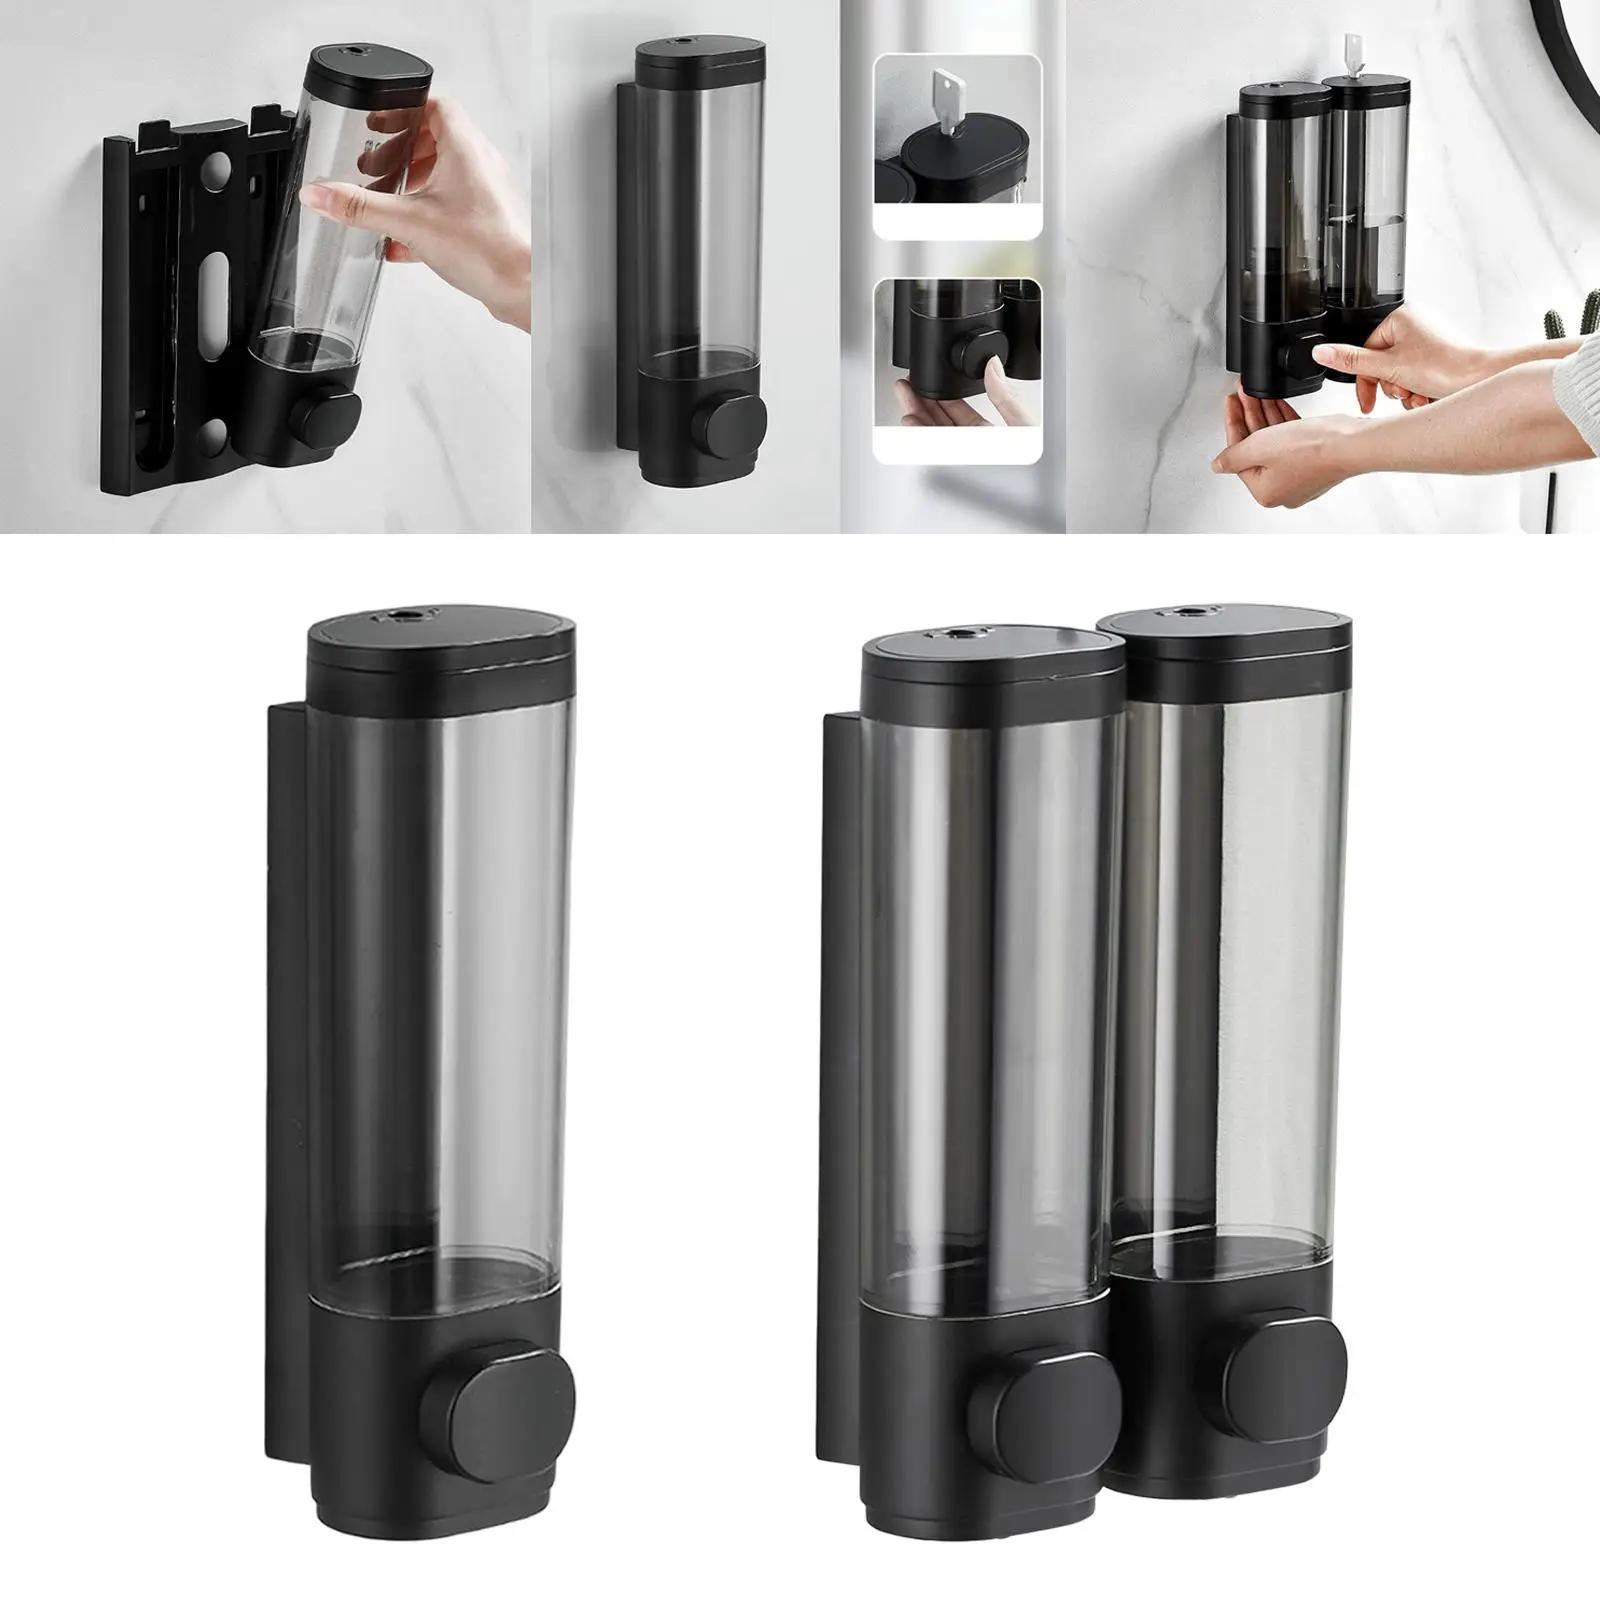 Manual Soap Dispenser Shampoo Conditioner Dispenser 300ml Commercial Soap Dispenser Foam Soap Dispenser for Kitchen Office Hotel